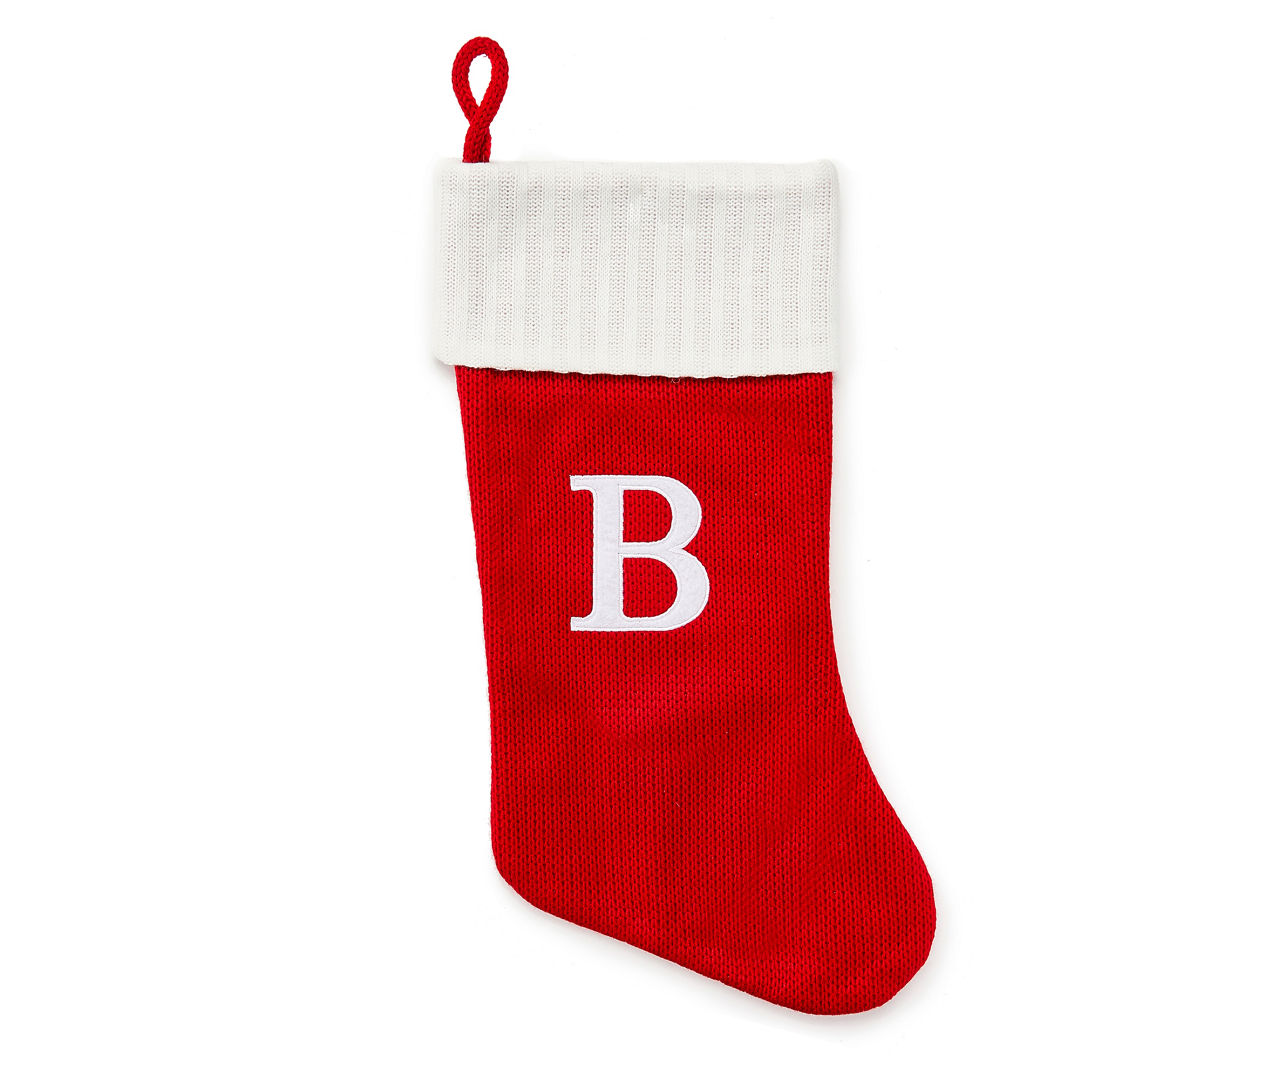 "B" Monogram Red Knit Stocking with White Trim